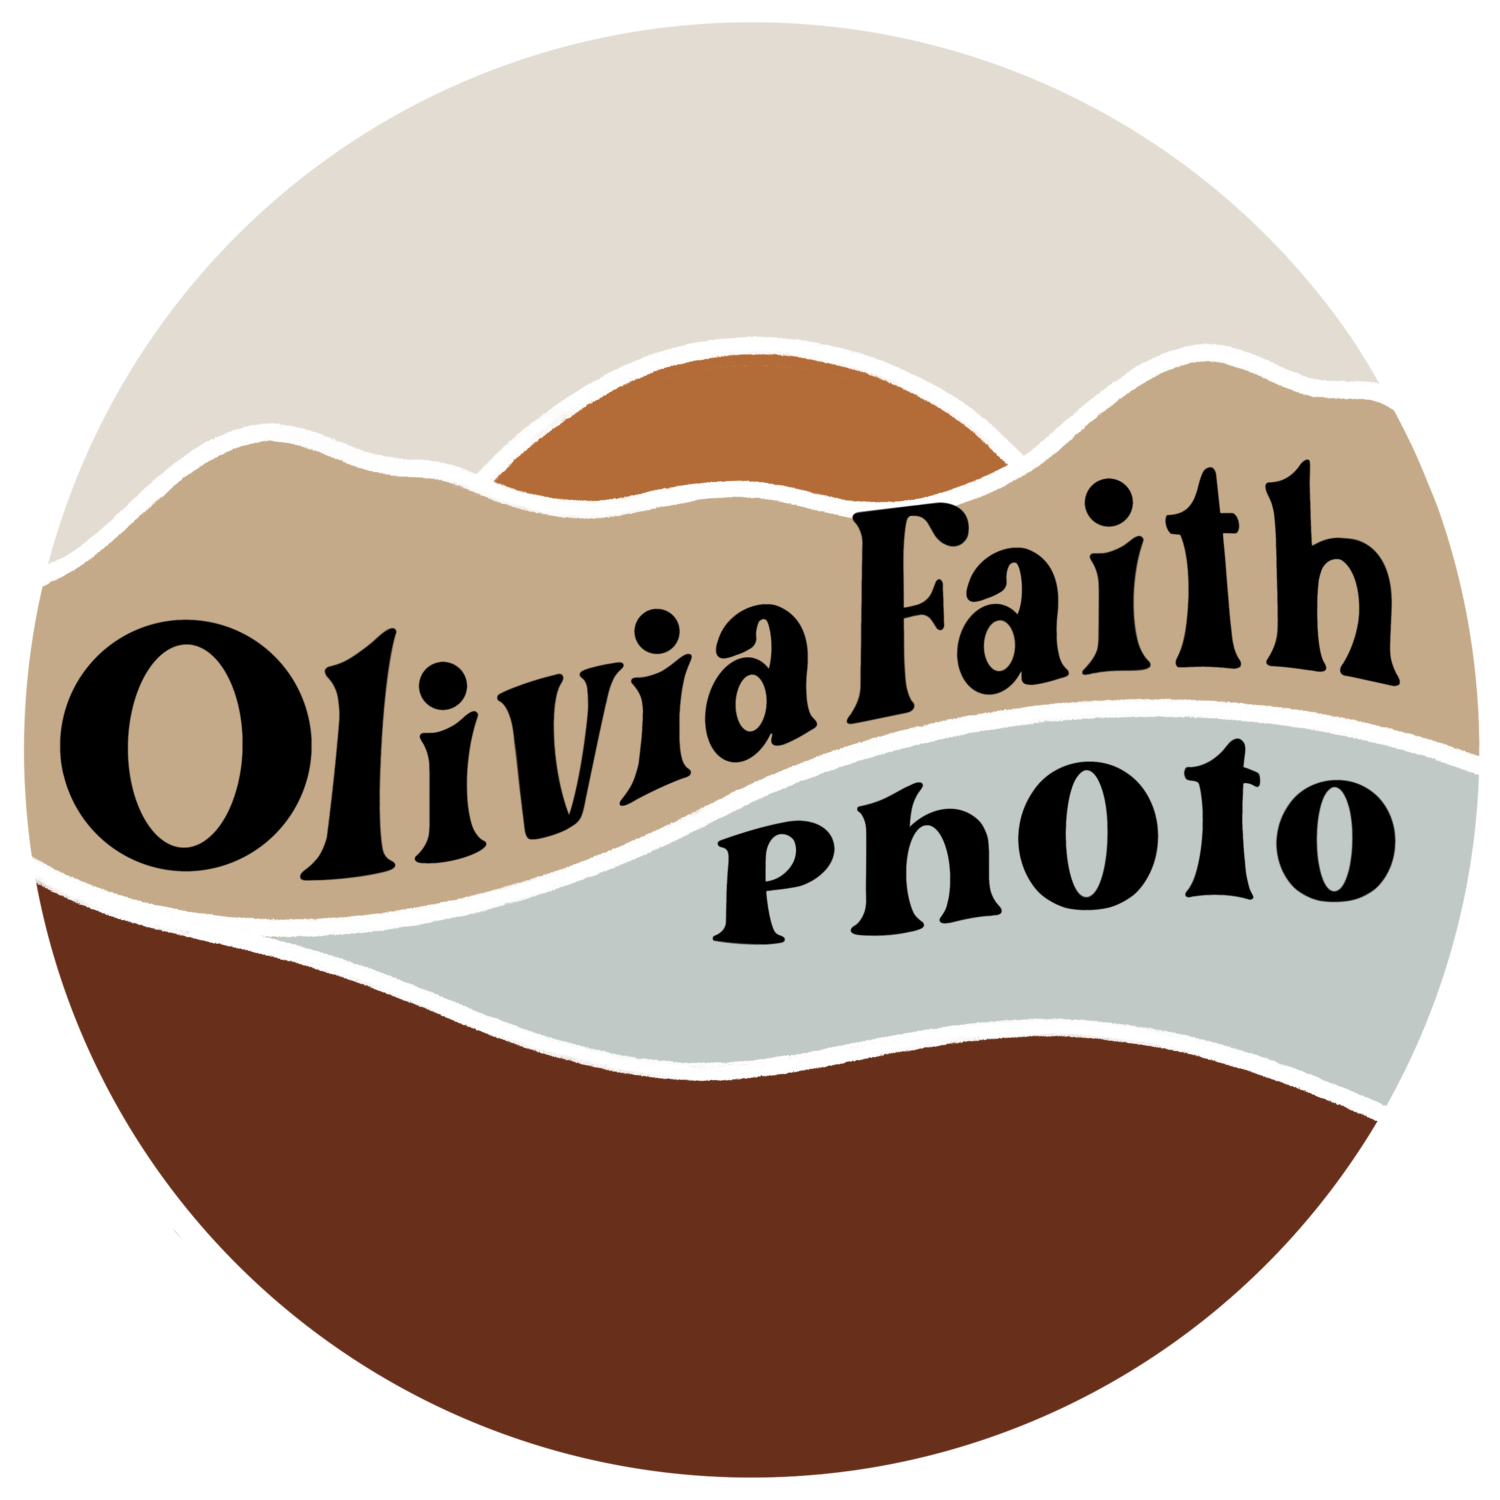 Olivia Faith Photo